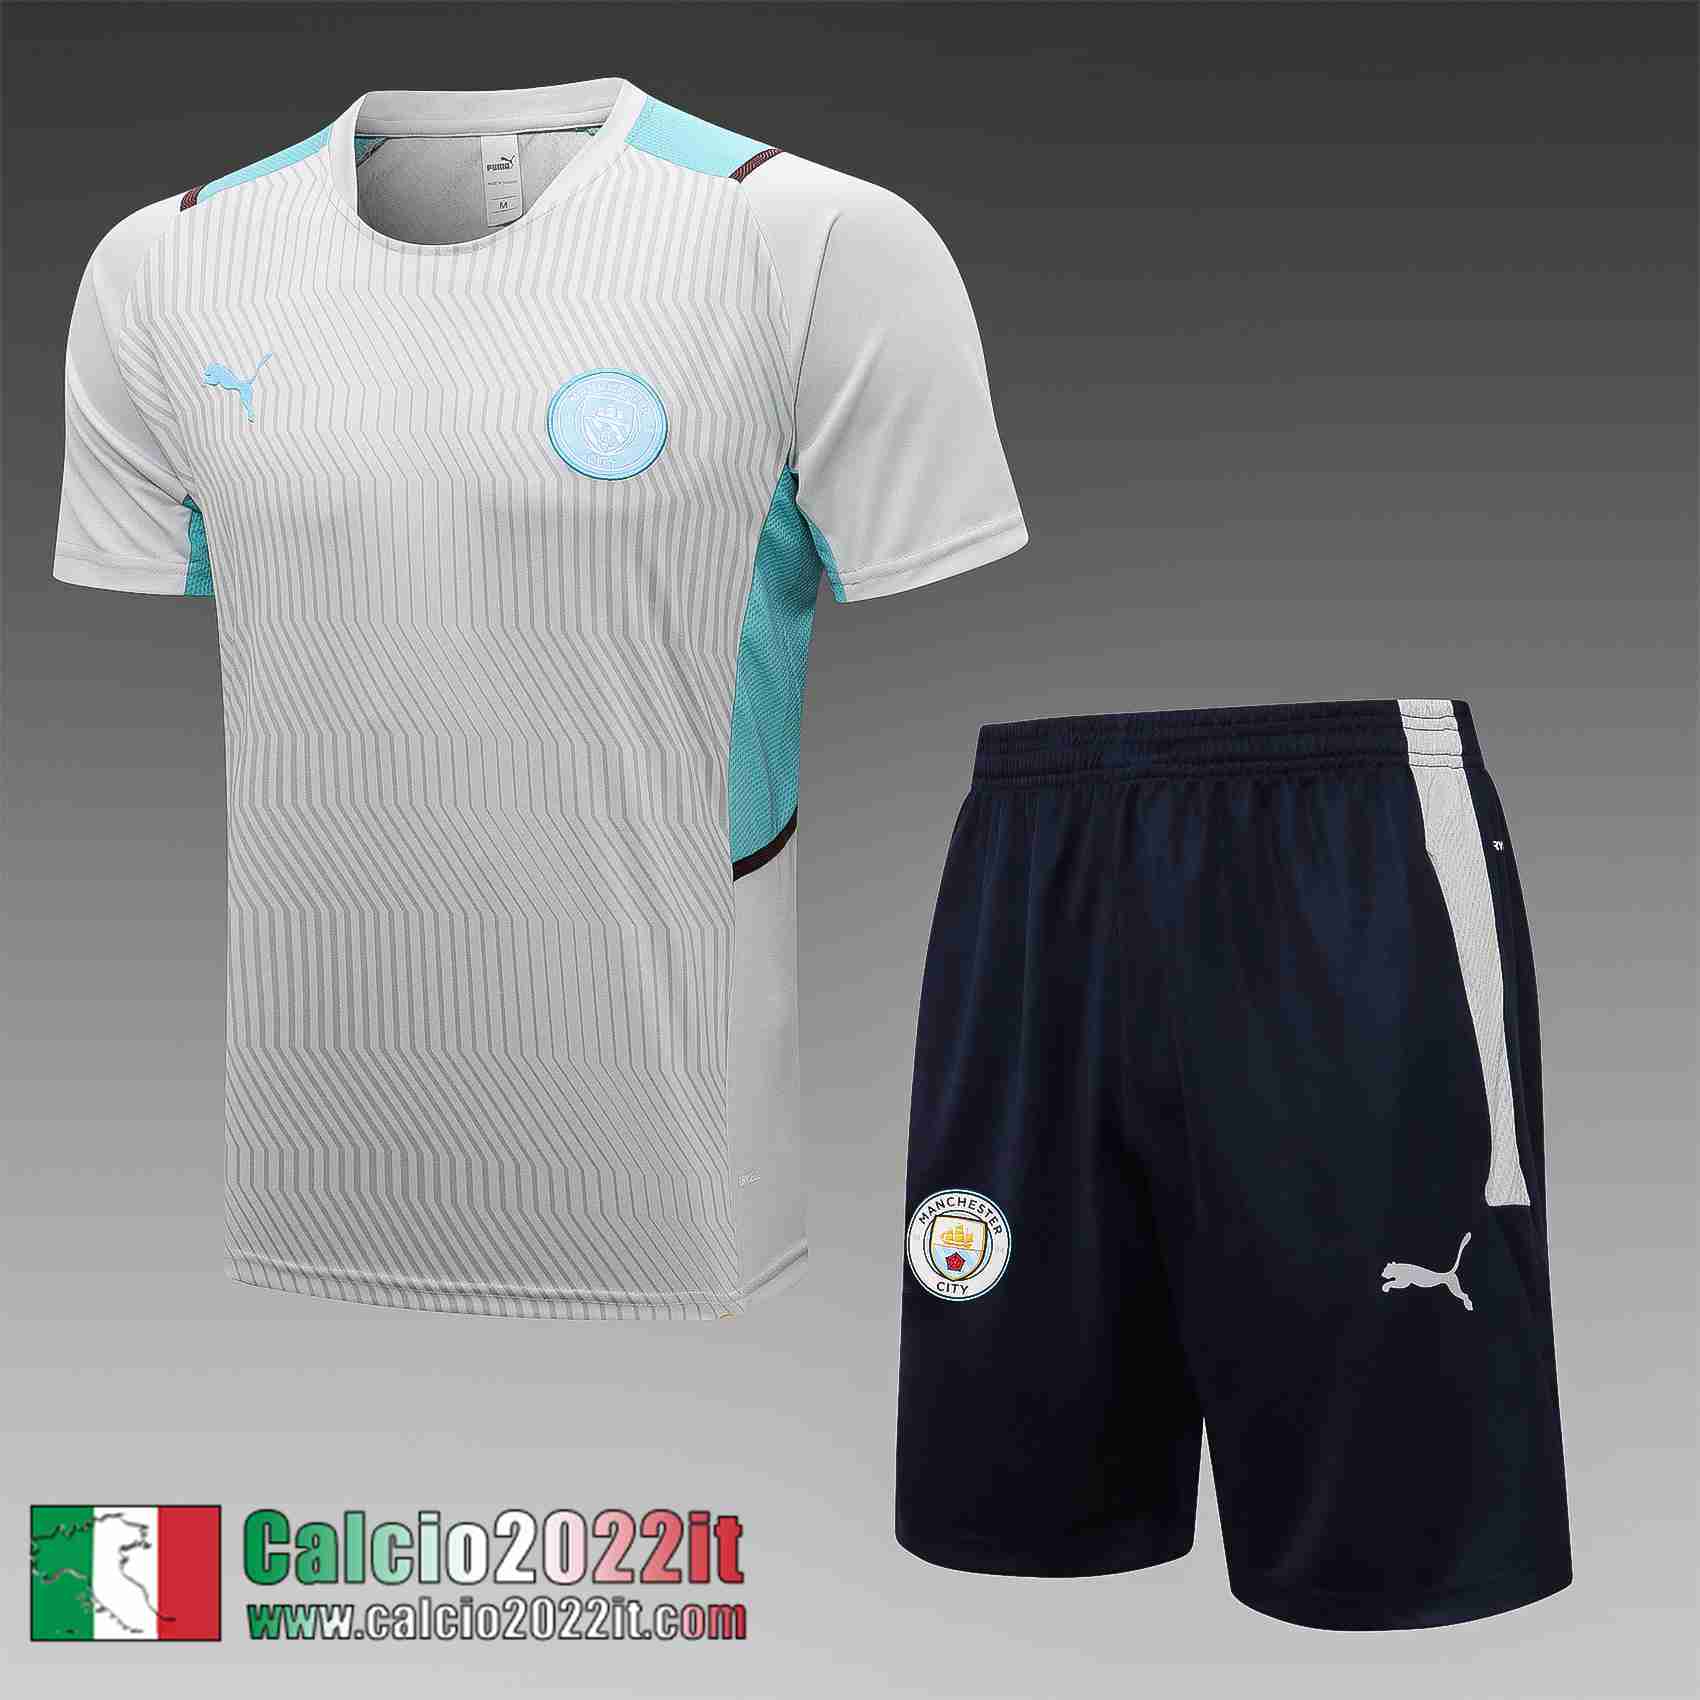 Manchester City T-shirt grigio chiaro Uomo 2021 2022 PL243